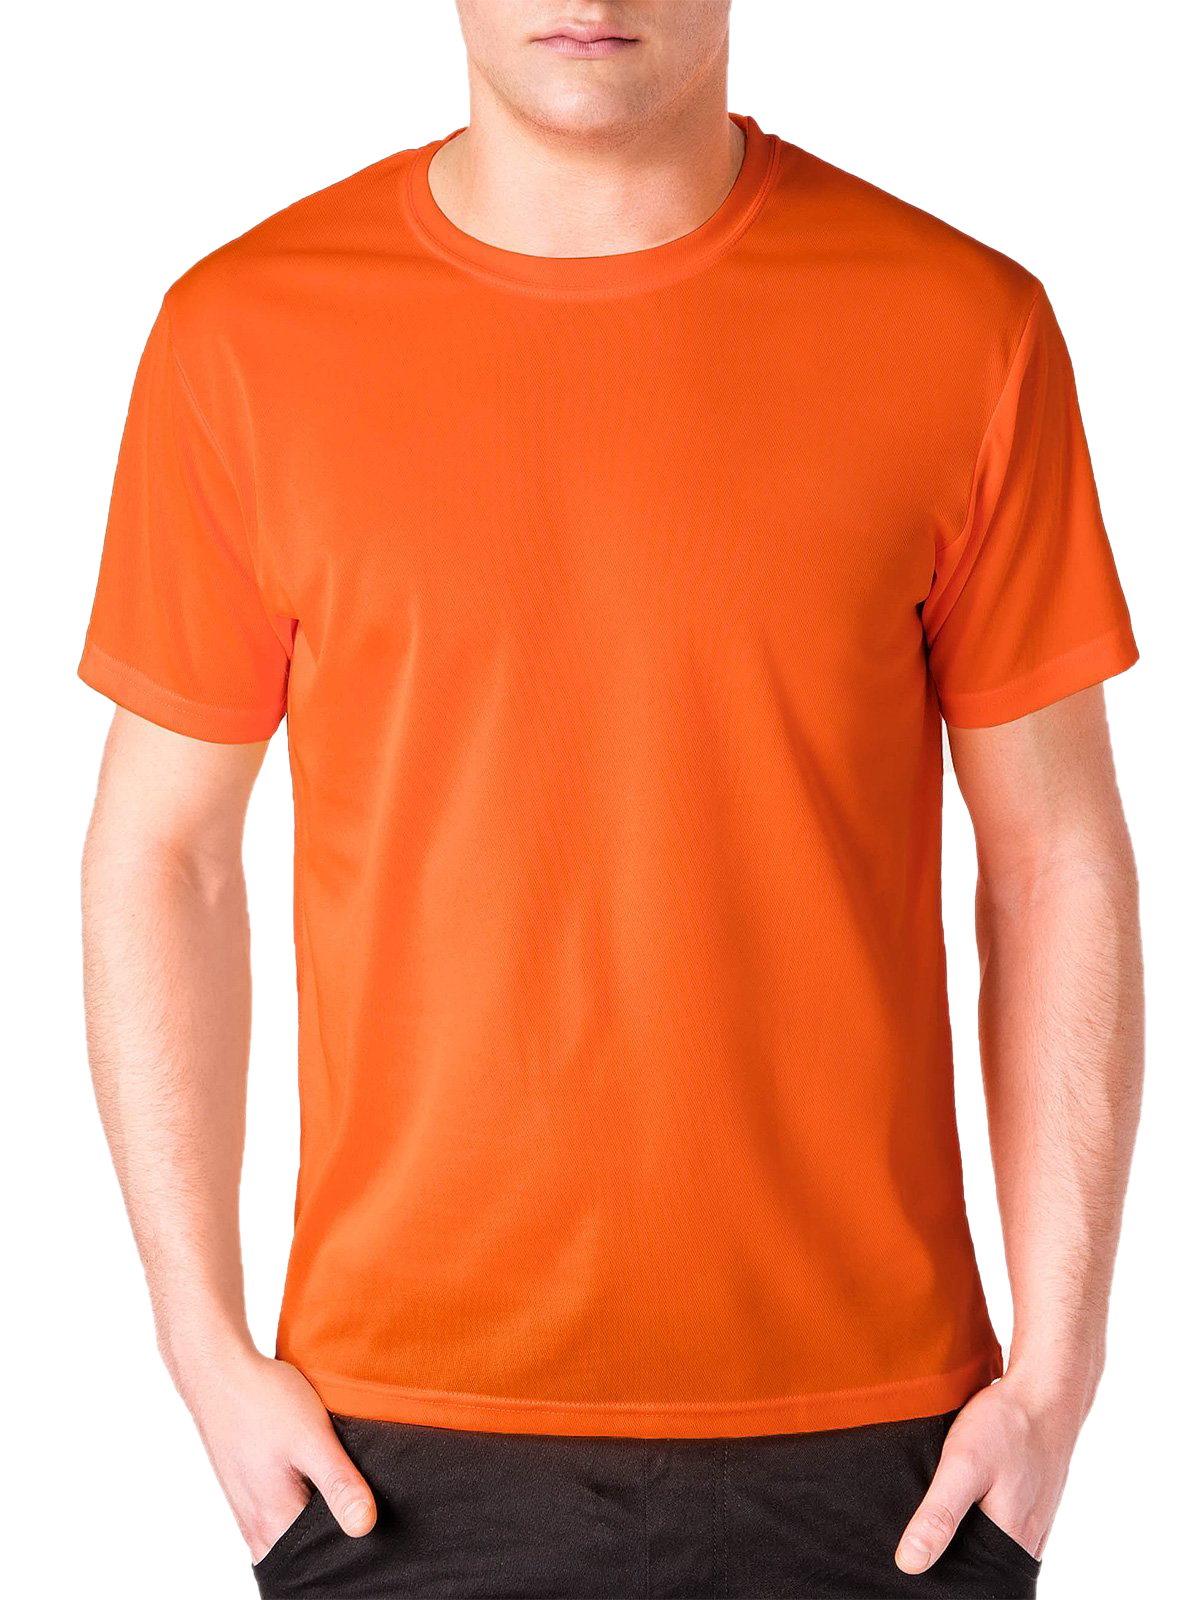 Orange Shirt Template